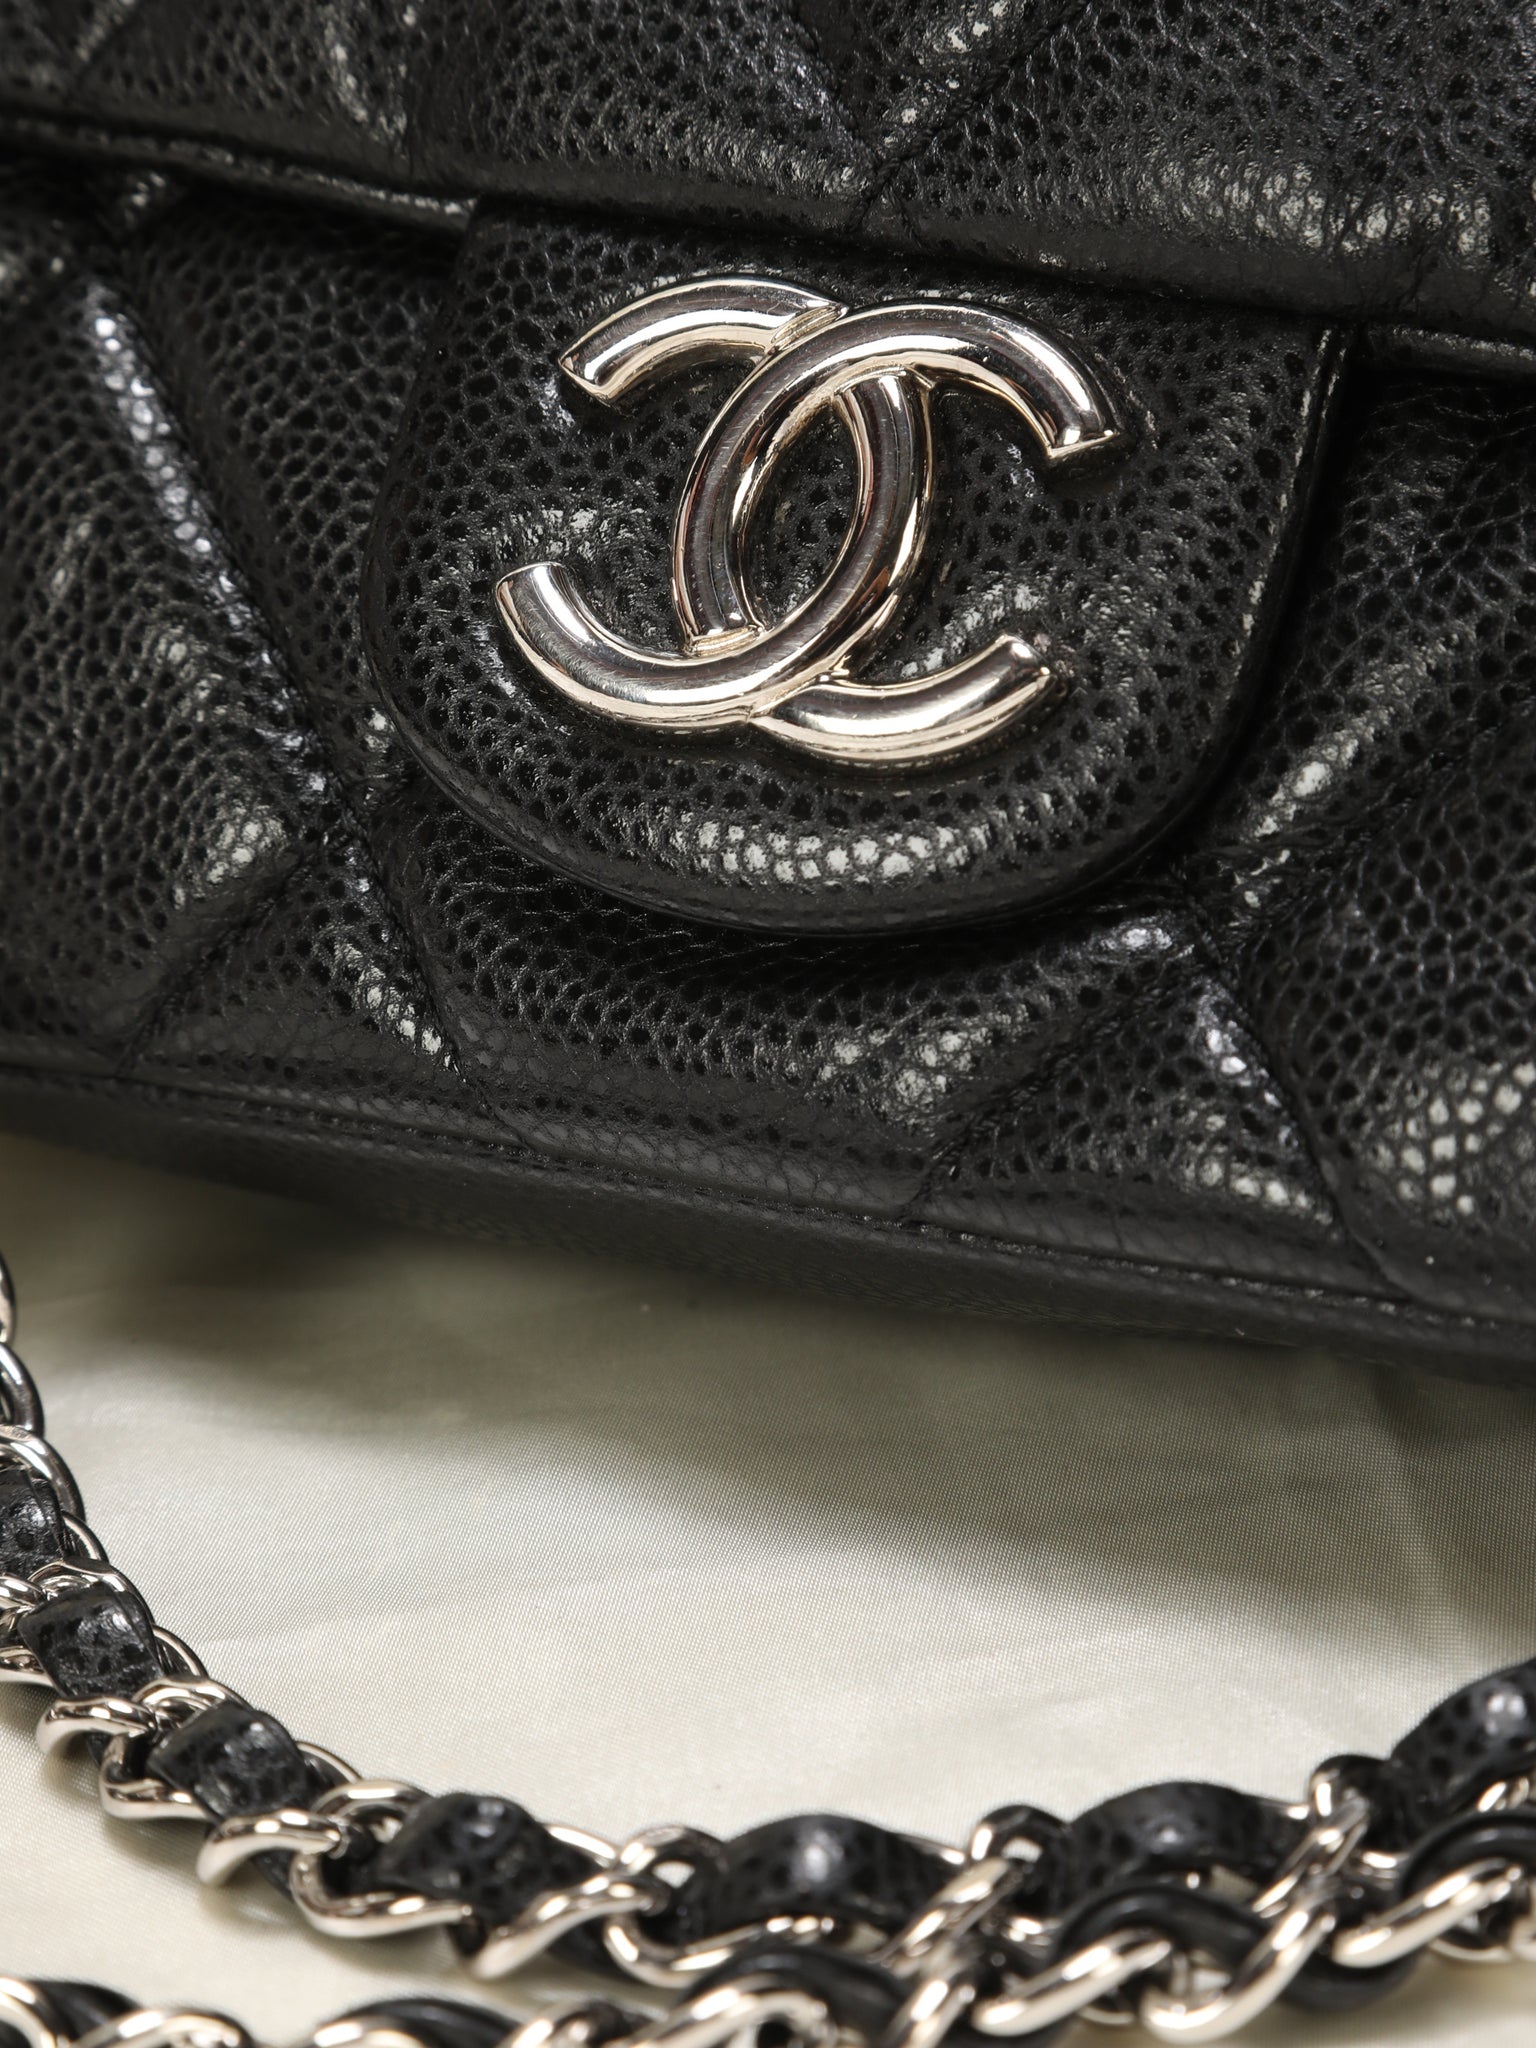 Chanel Caviar Single Flap Shoulder Bag